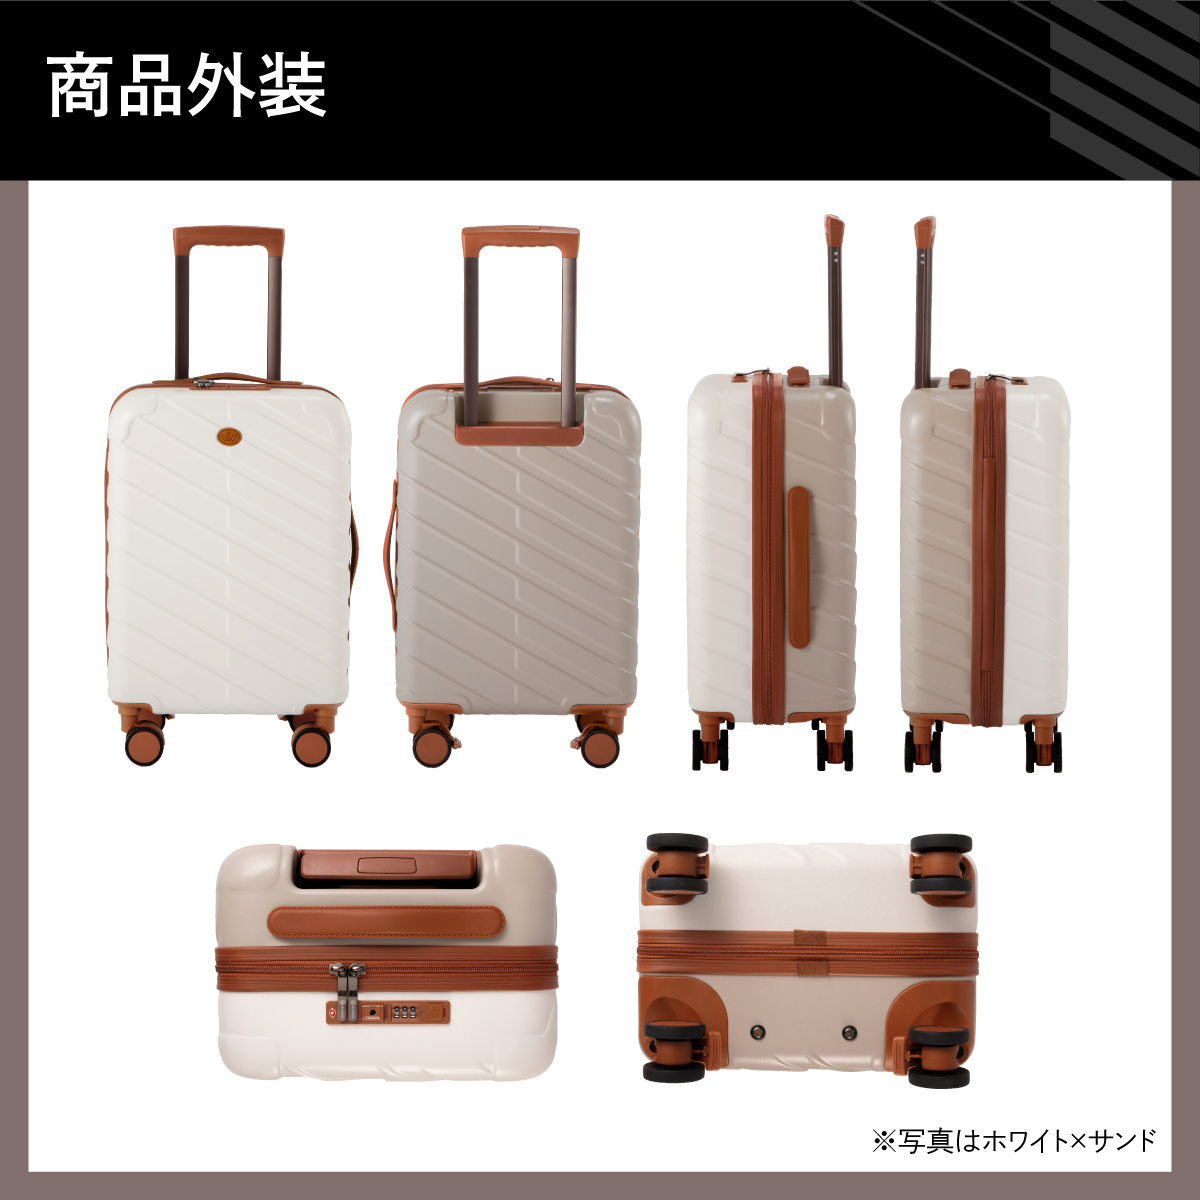 WEAR スーツケース Sサイズ 機内持ち込み ストッパー付き 軽量 高機能